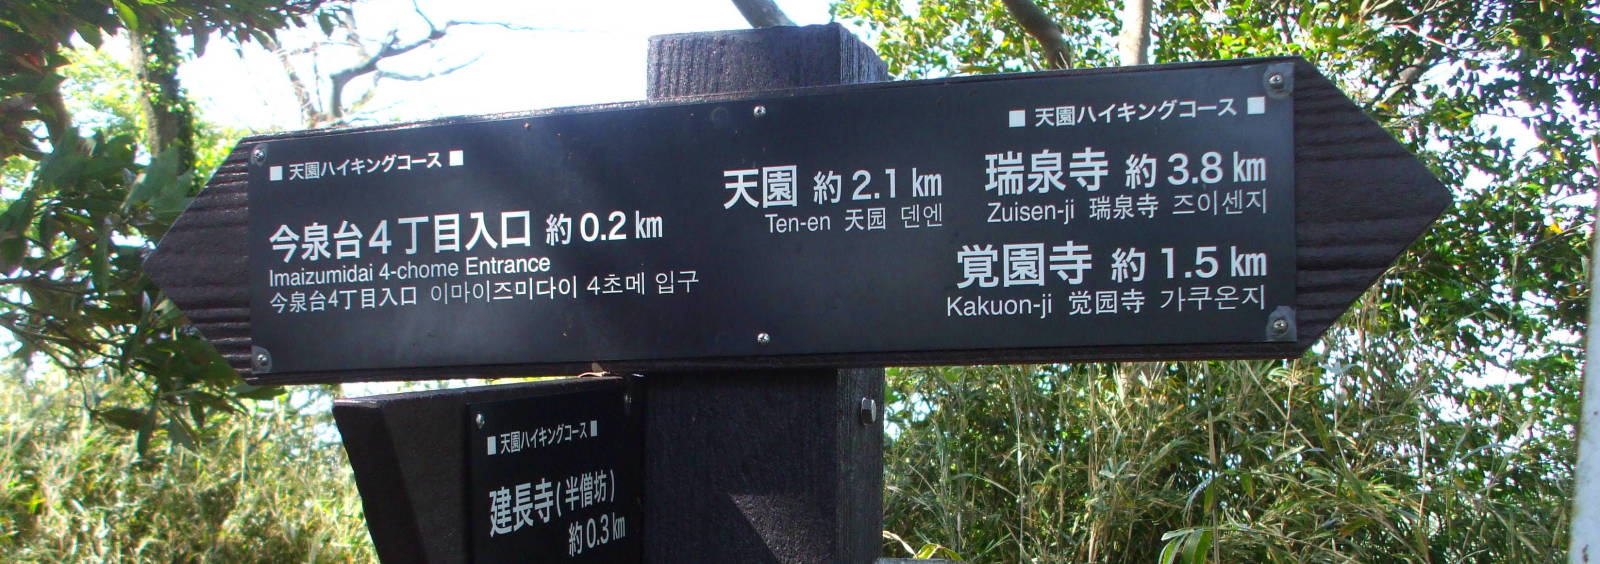 Signpost indicating several trekking paths on the ridgeline surrounding Kamakura.